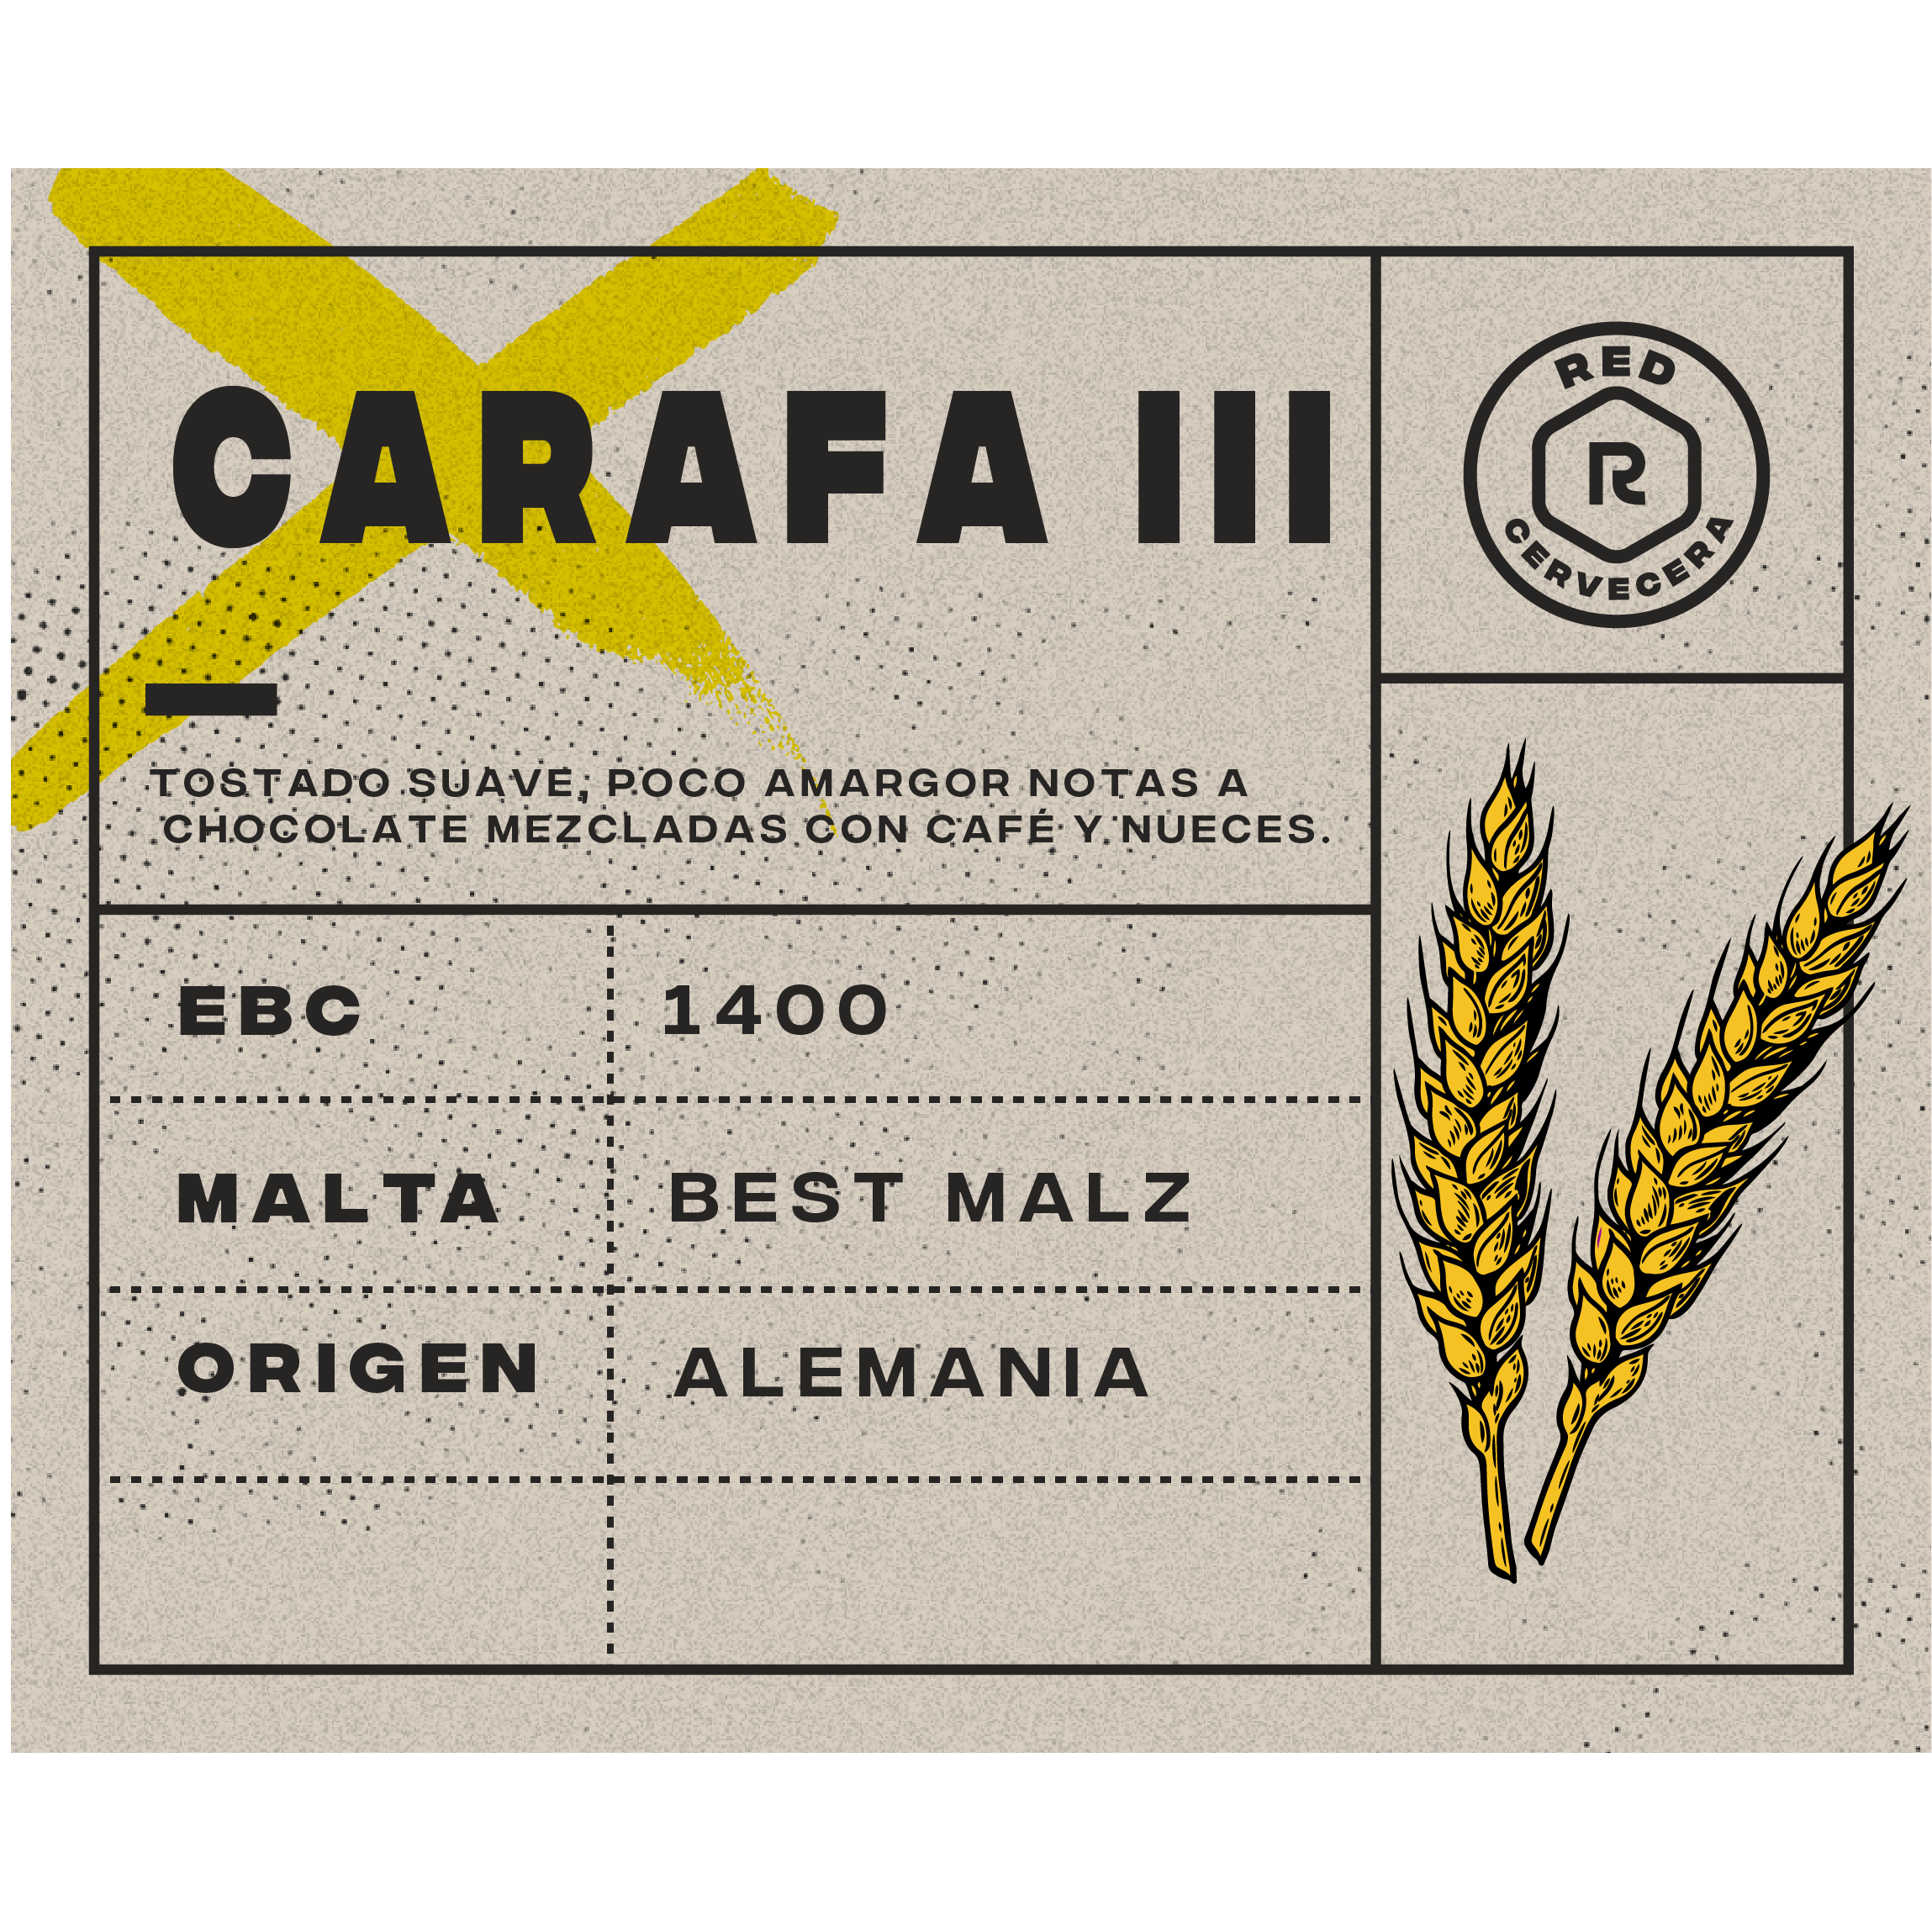 24-Carafa Special III ( EBC 1400 ) ( 1kg )